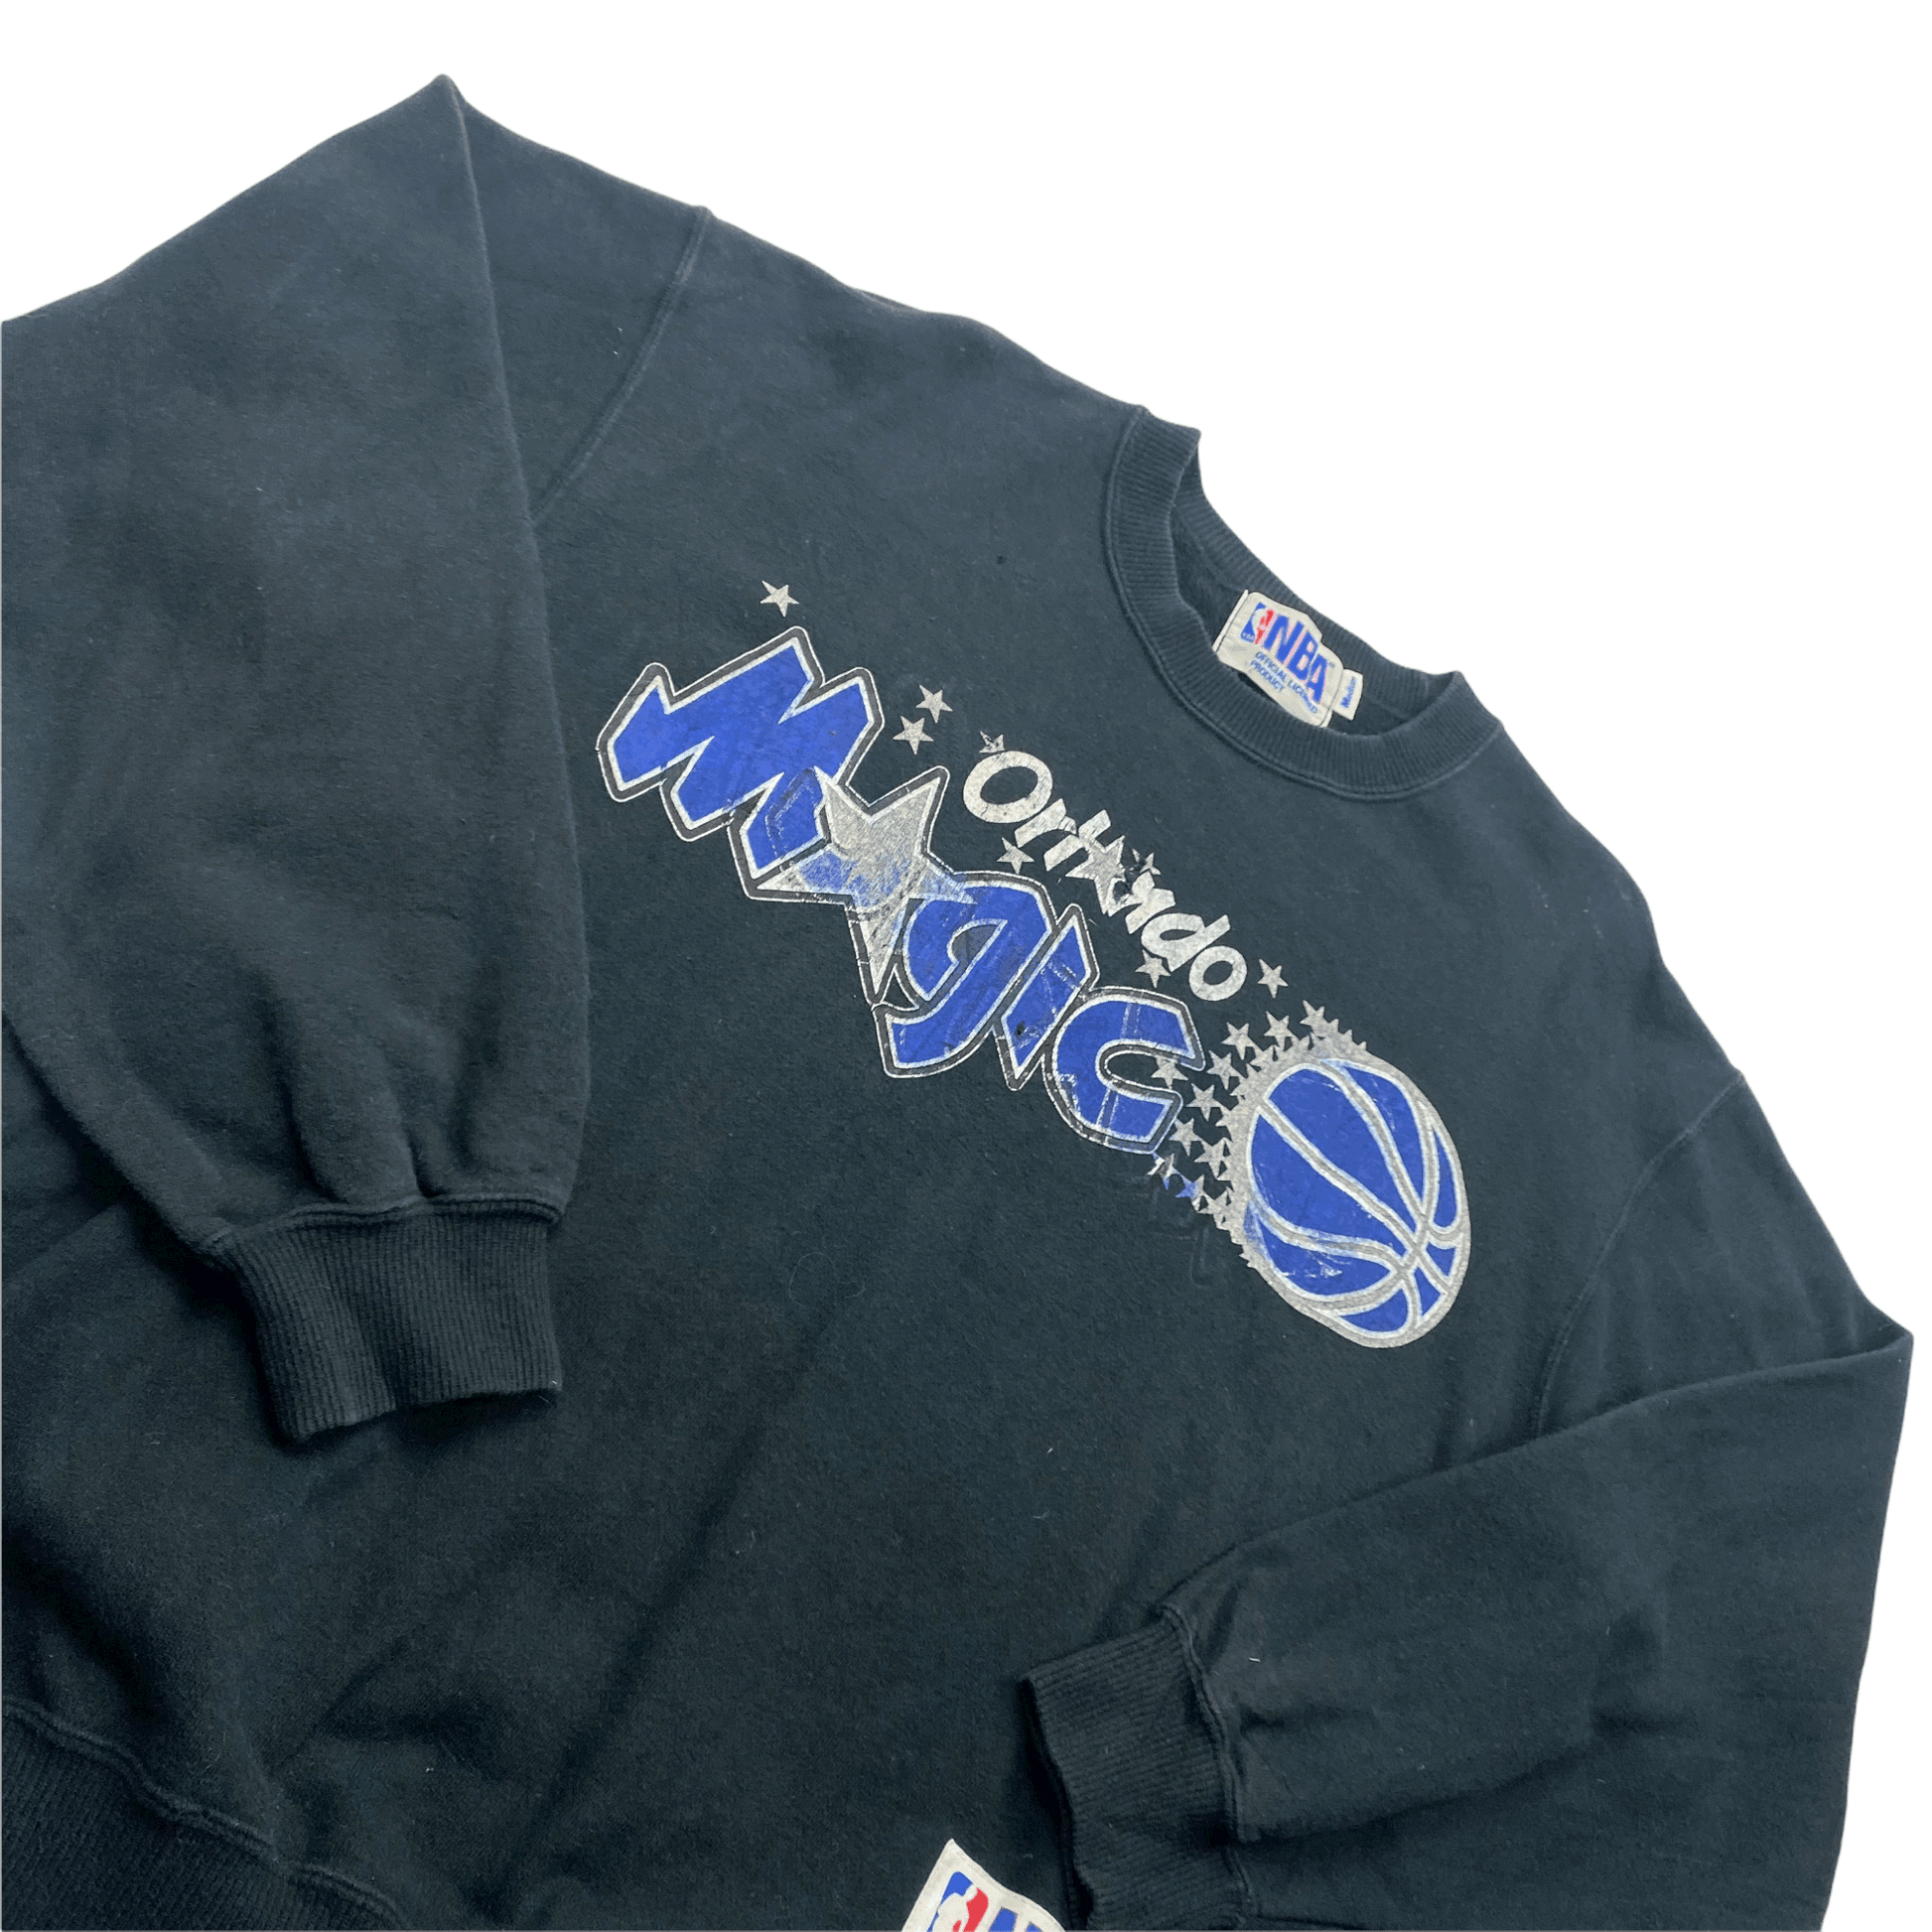 Vintage 90s Black NBA Orlando Magic Spell-Out Sweatshirt - Medium - The Streetwear Studio